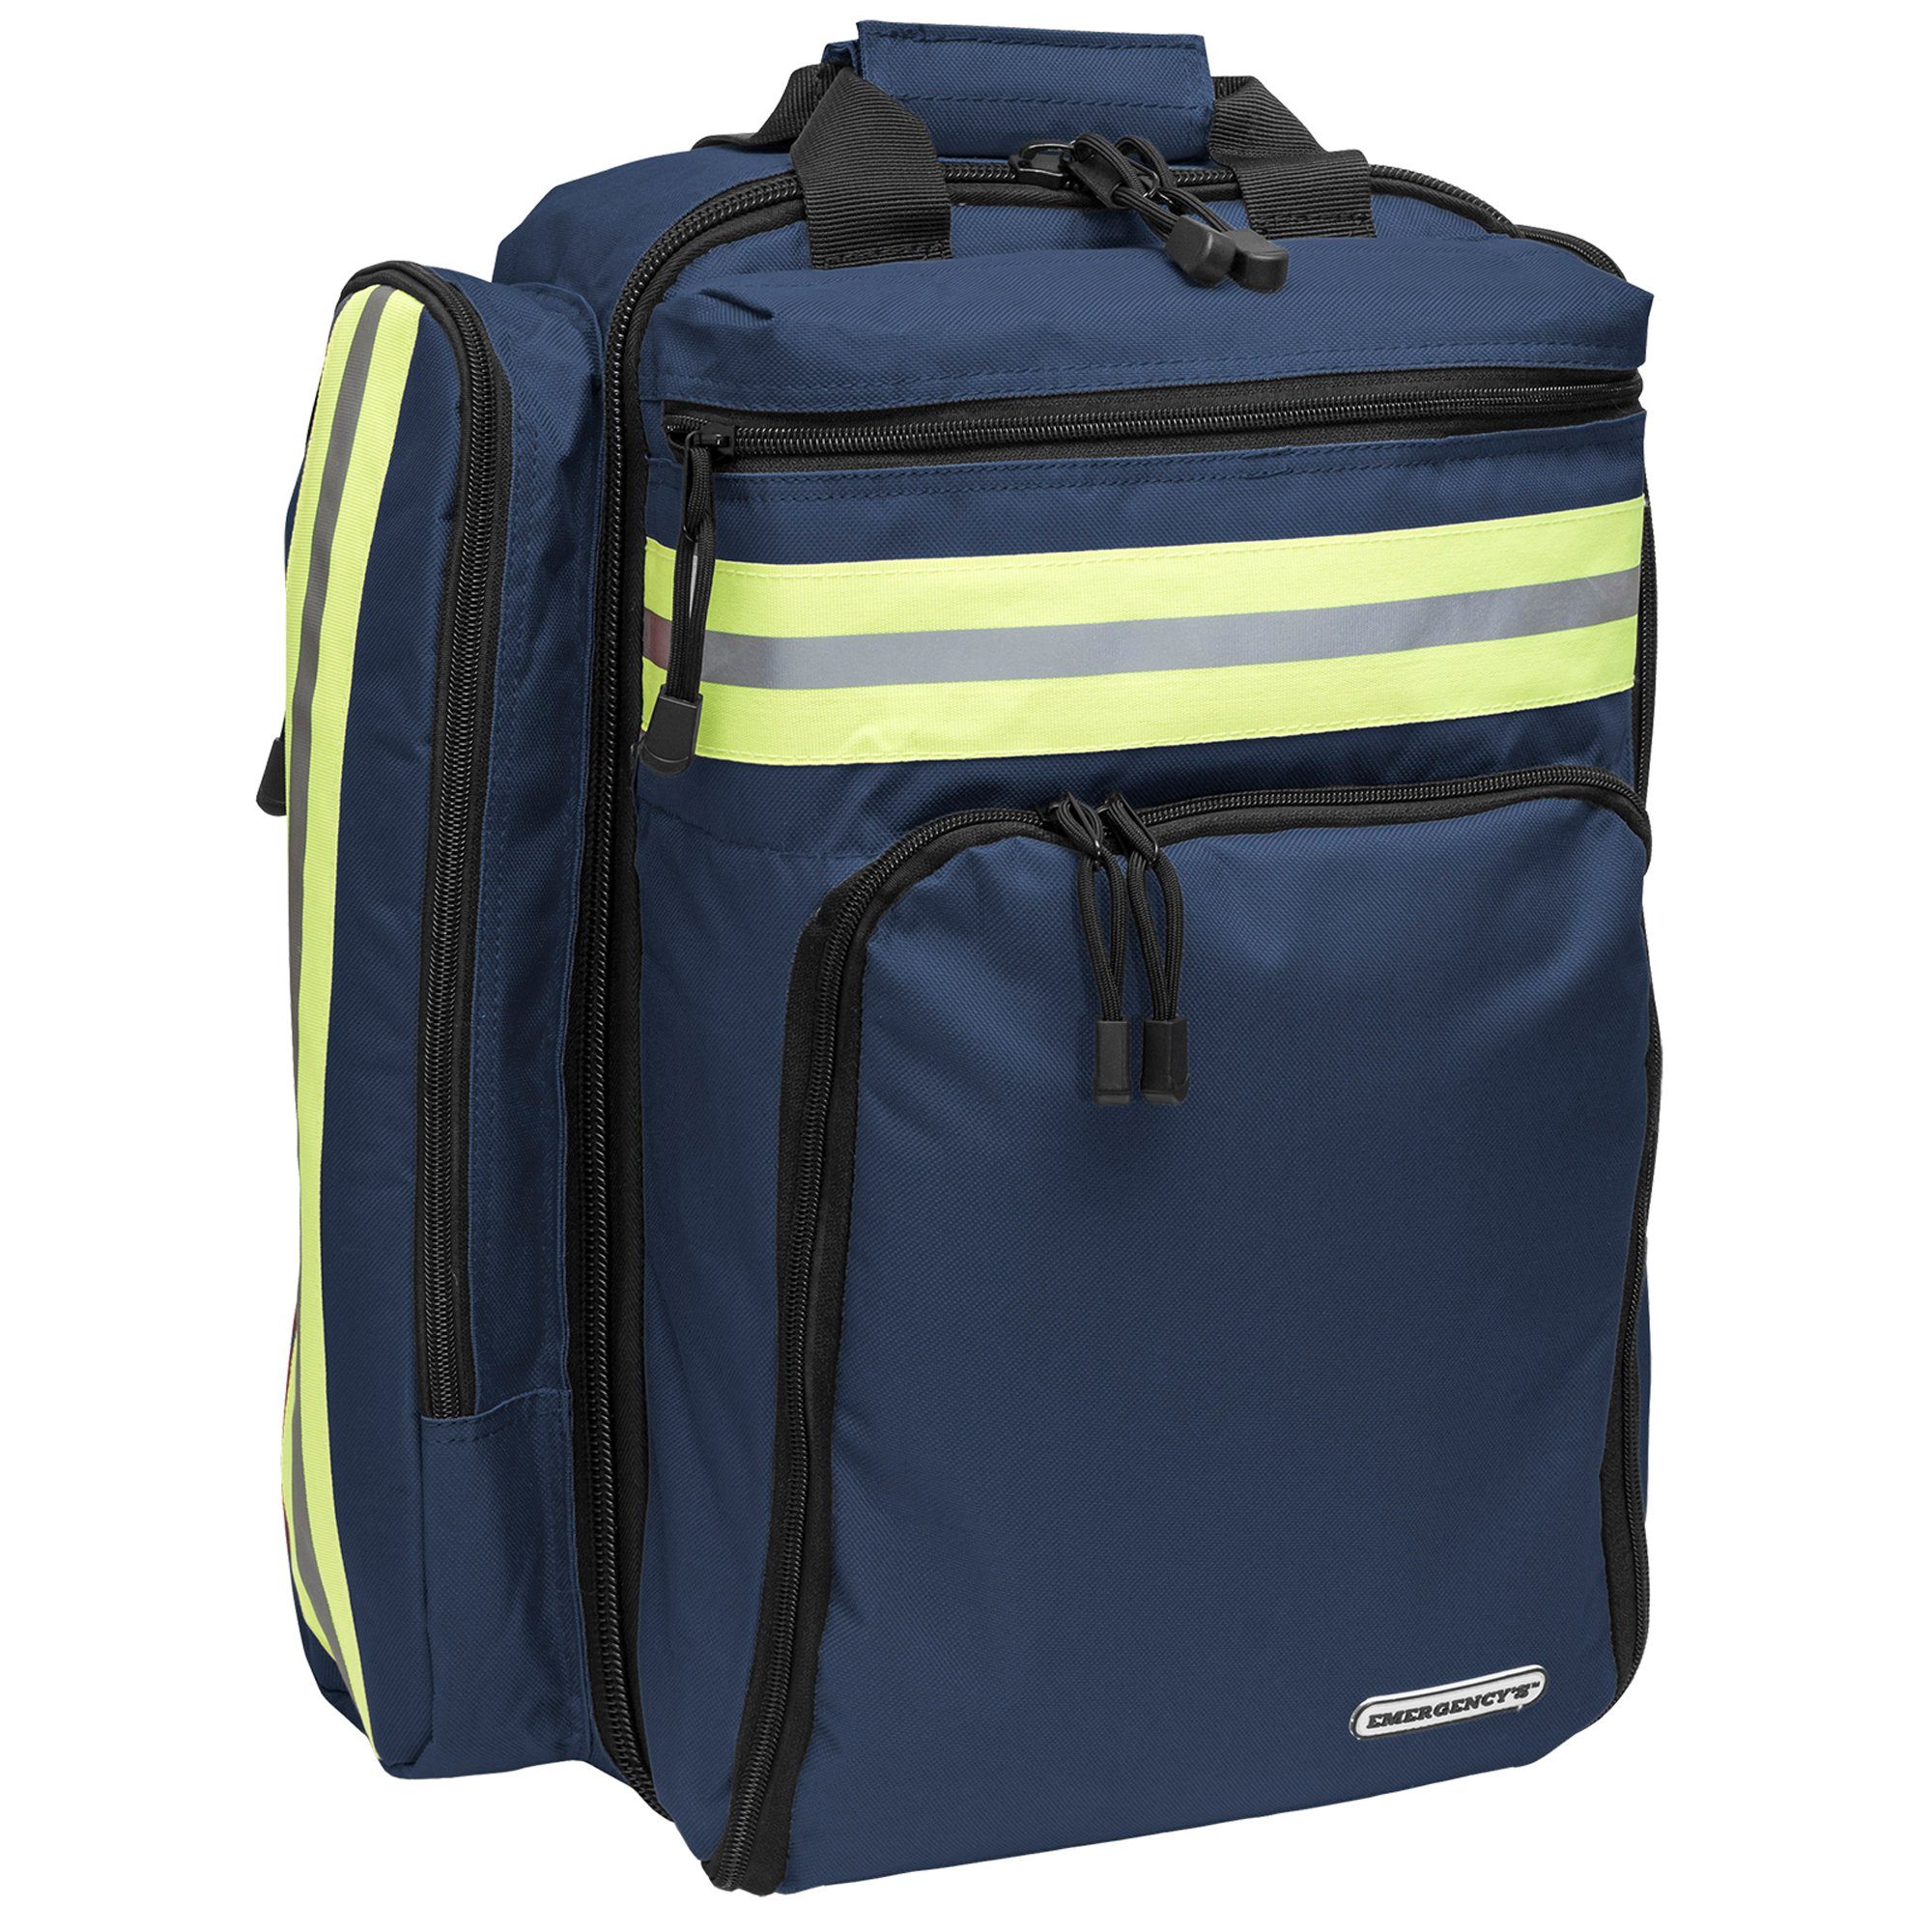 Elite Bags Bagster Notfallrucksack / Tasche